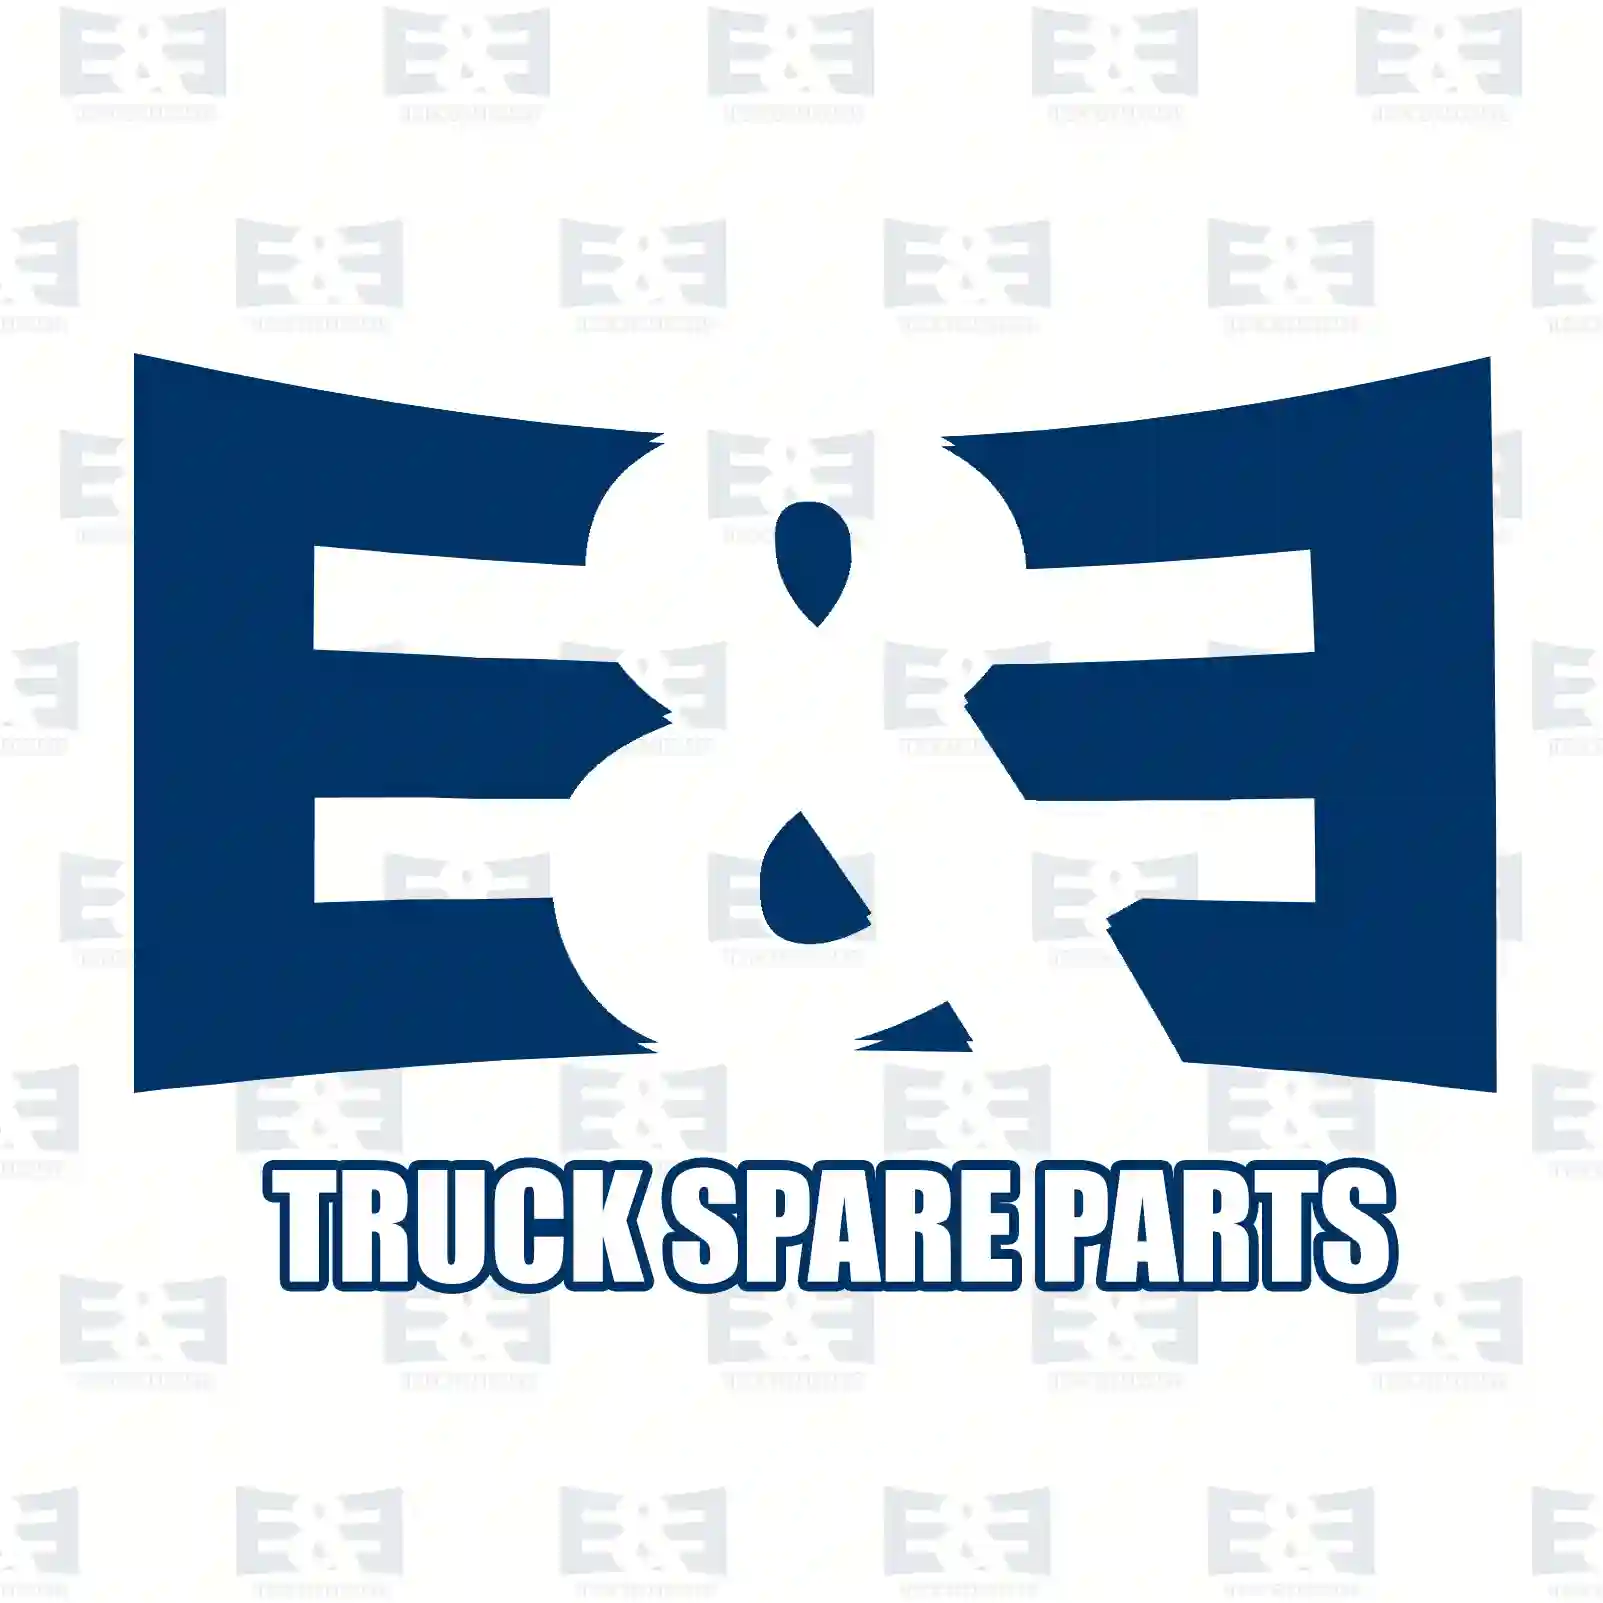  Belt tensioner kit || E&E Truck Spare Parts | Truck Spare Parts, Auotomotive Spare Parts